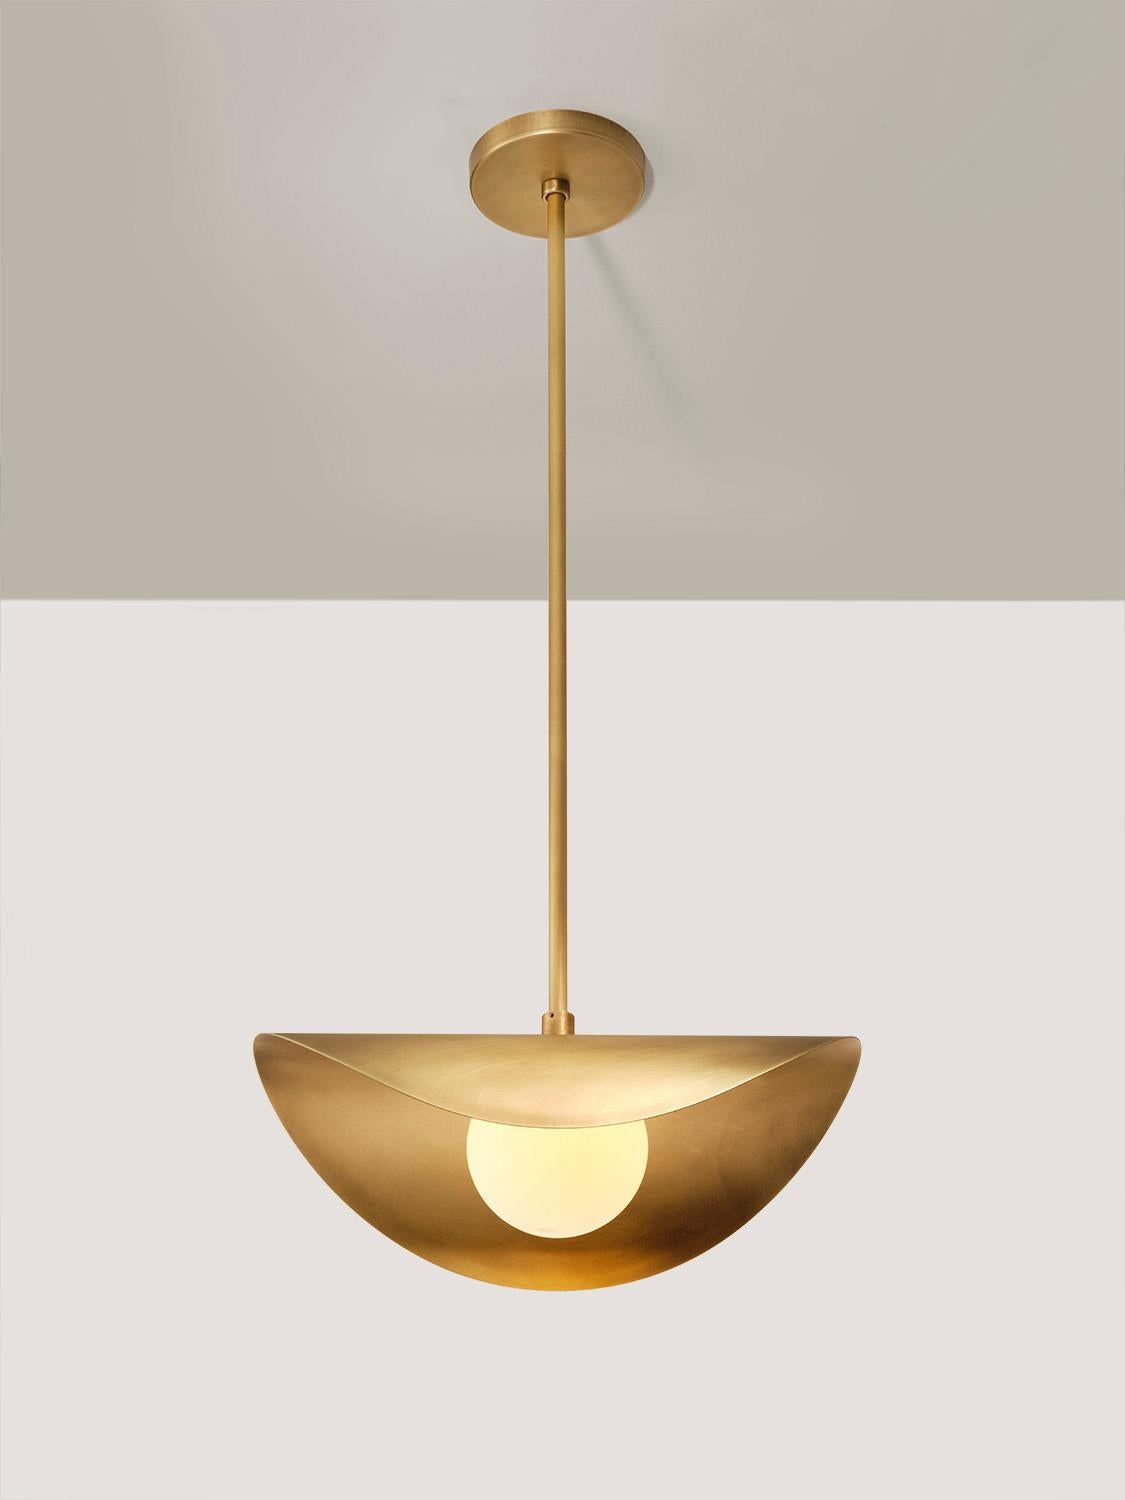 PETITE MONTERA Pendant, biomorphic form in Brass & Glass, Blueprint Lighting For Sale 1